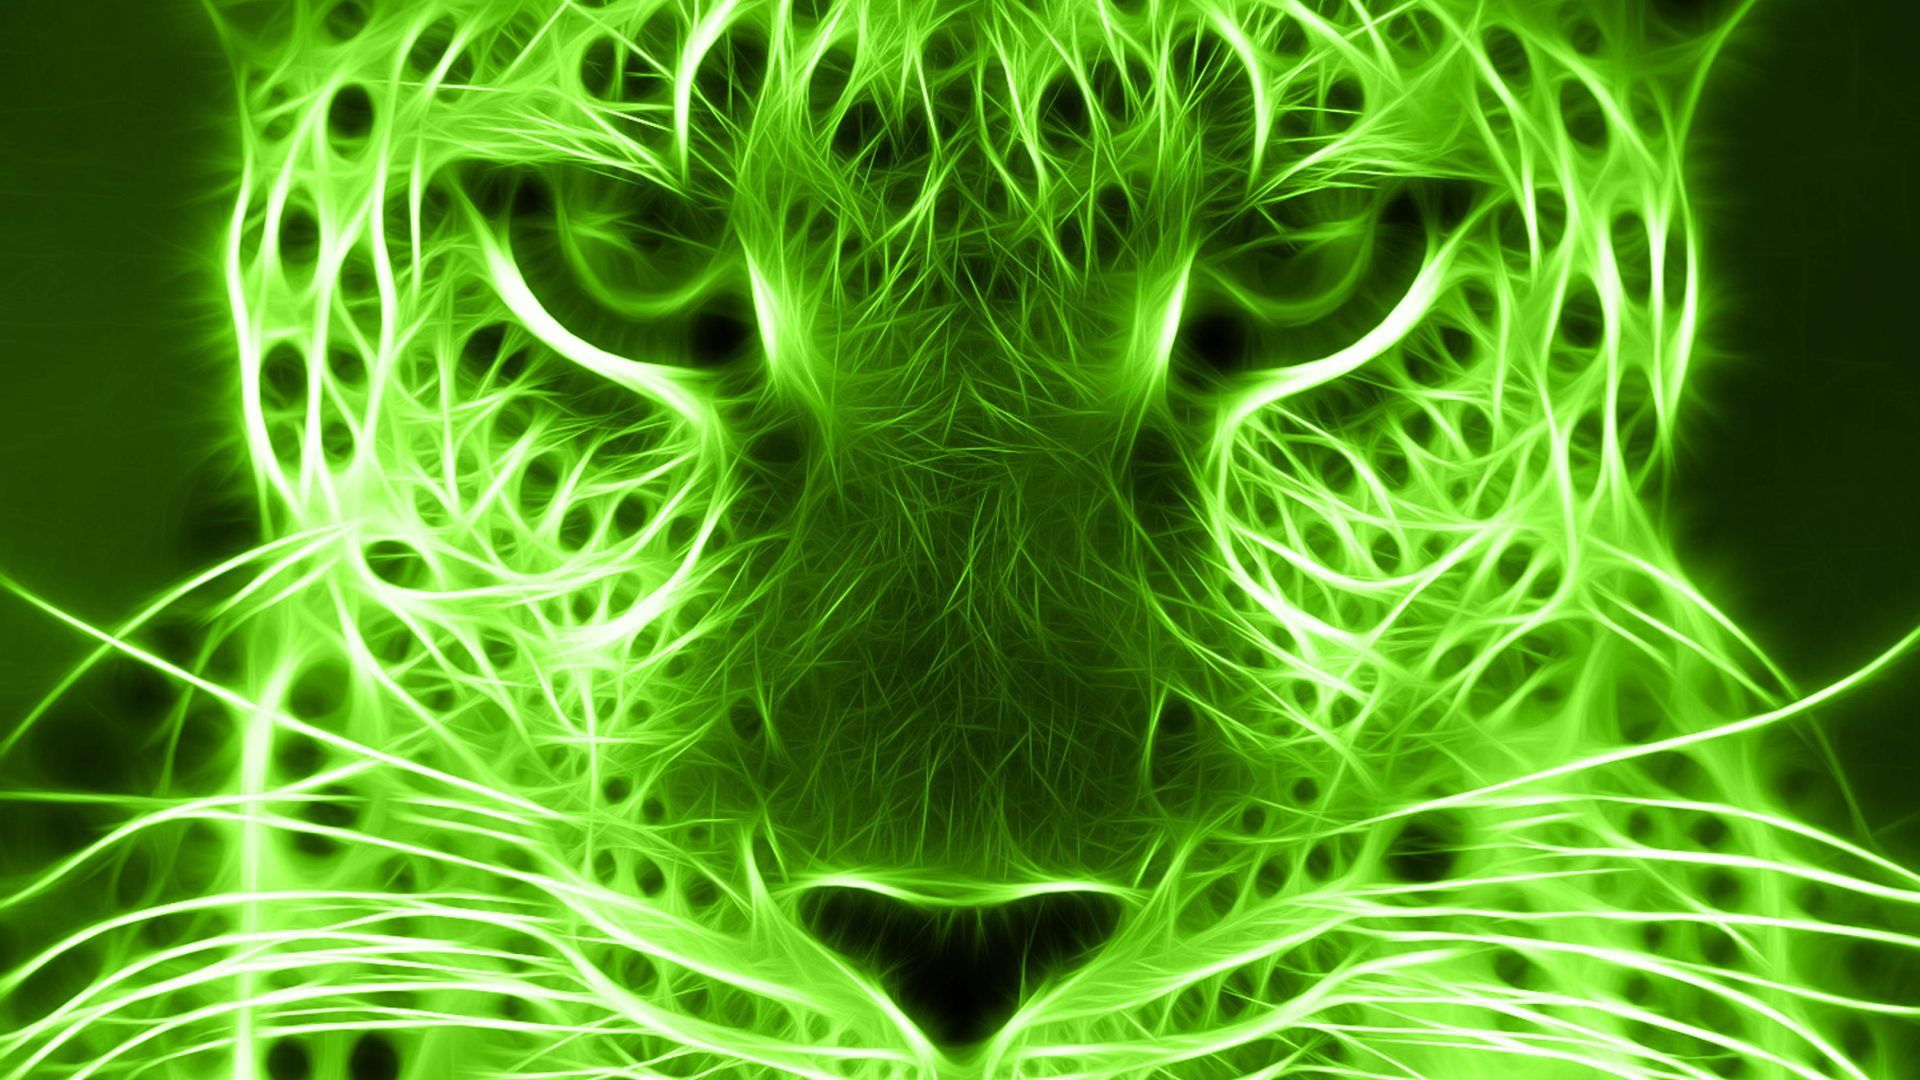 Green Tiger Wallpaper Free Green Tiger Background